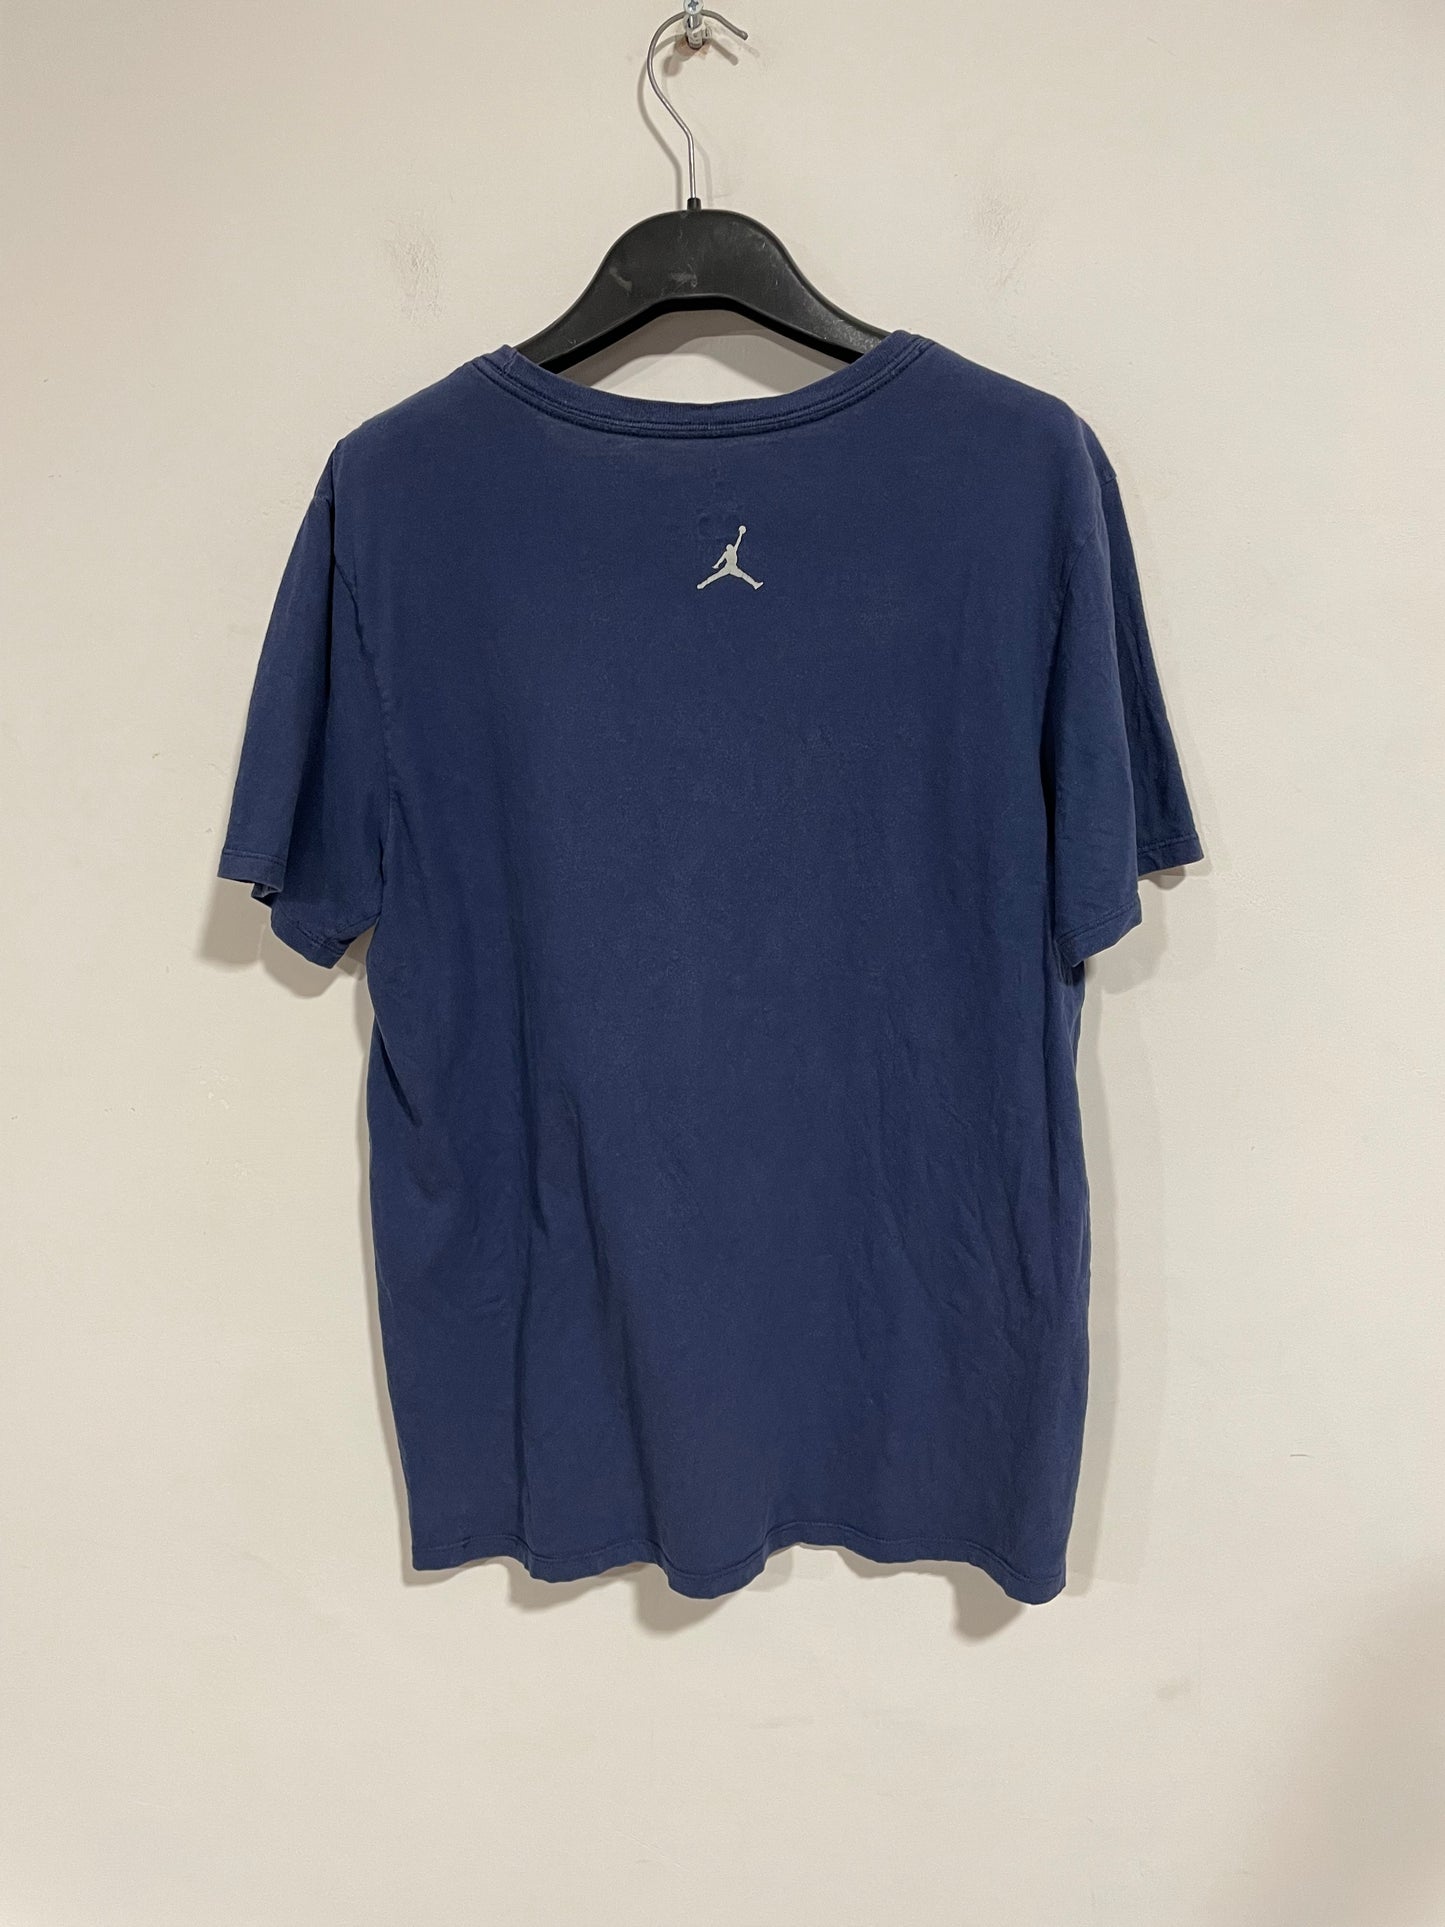 T shirt Air Jordan vintage (D243)